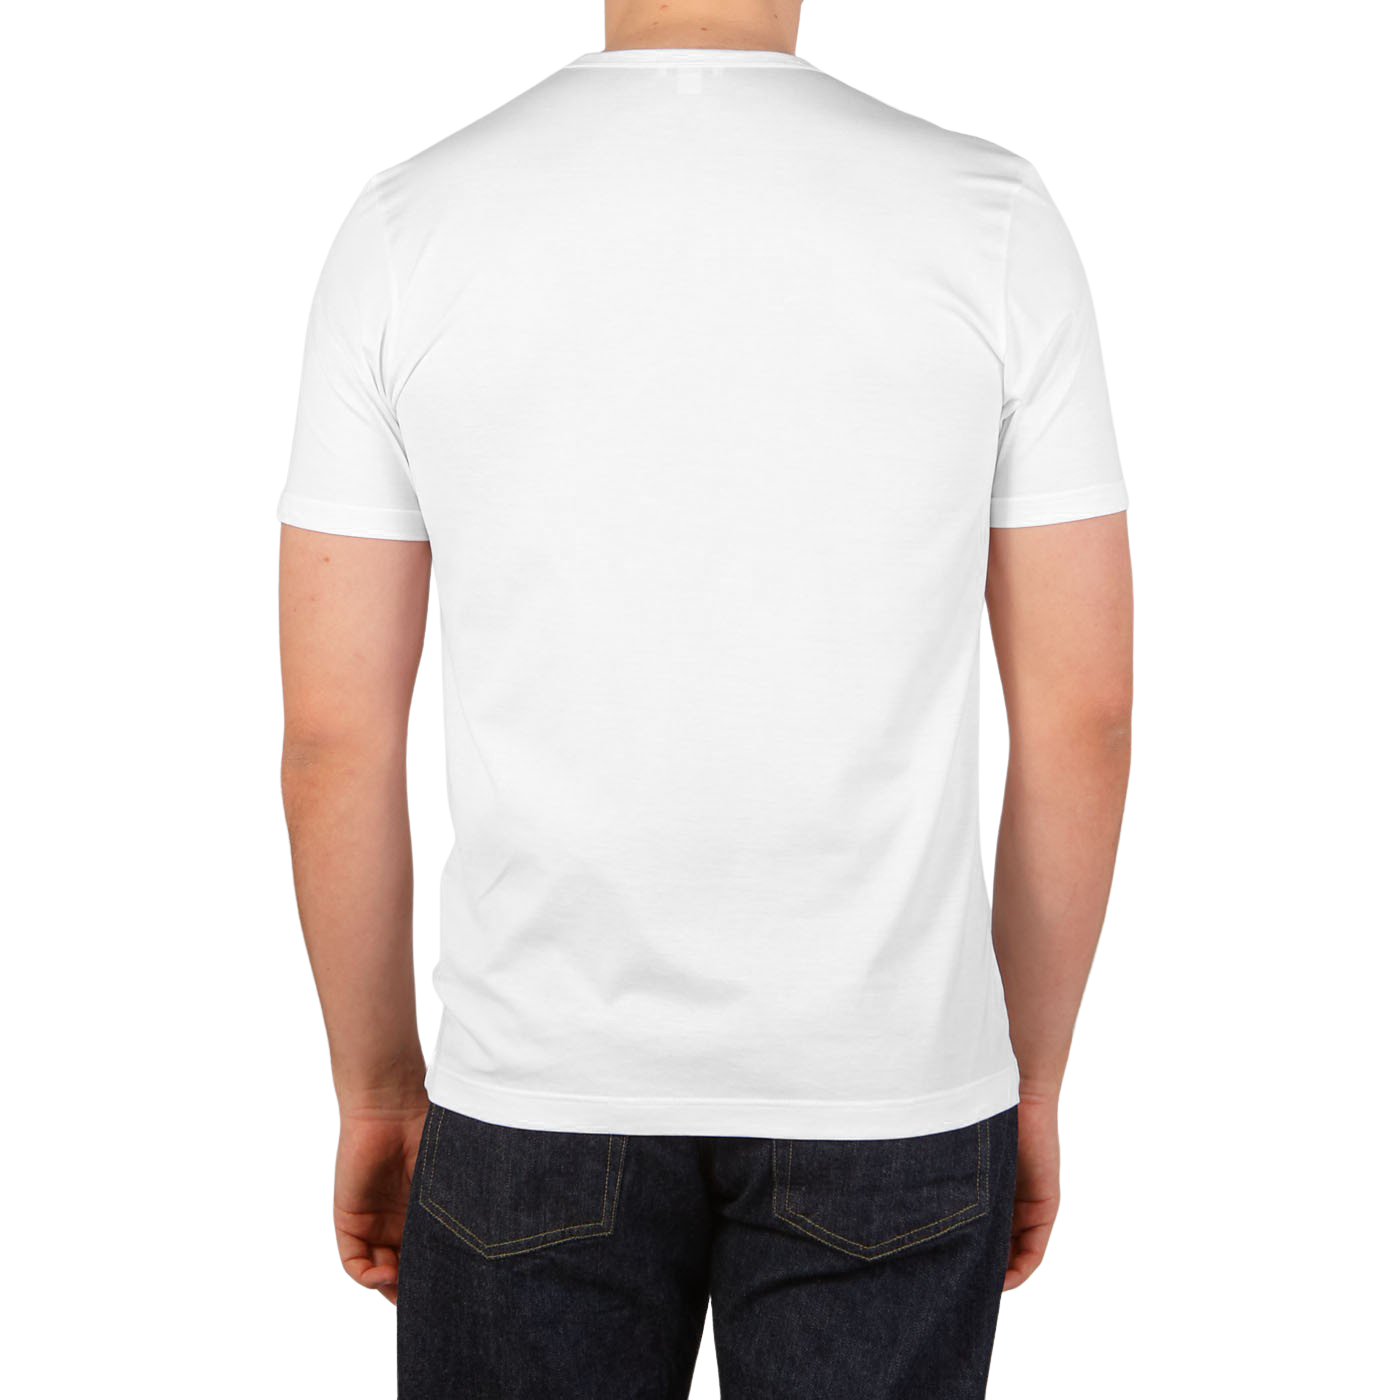 Sunspel White Classic Cotton T-Shirt Back1